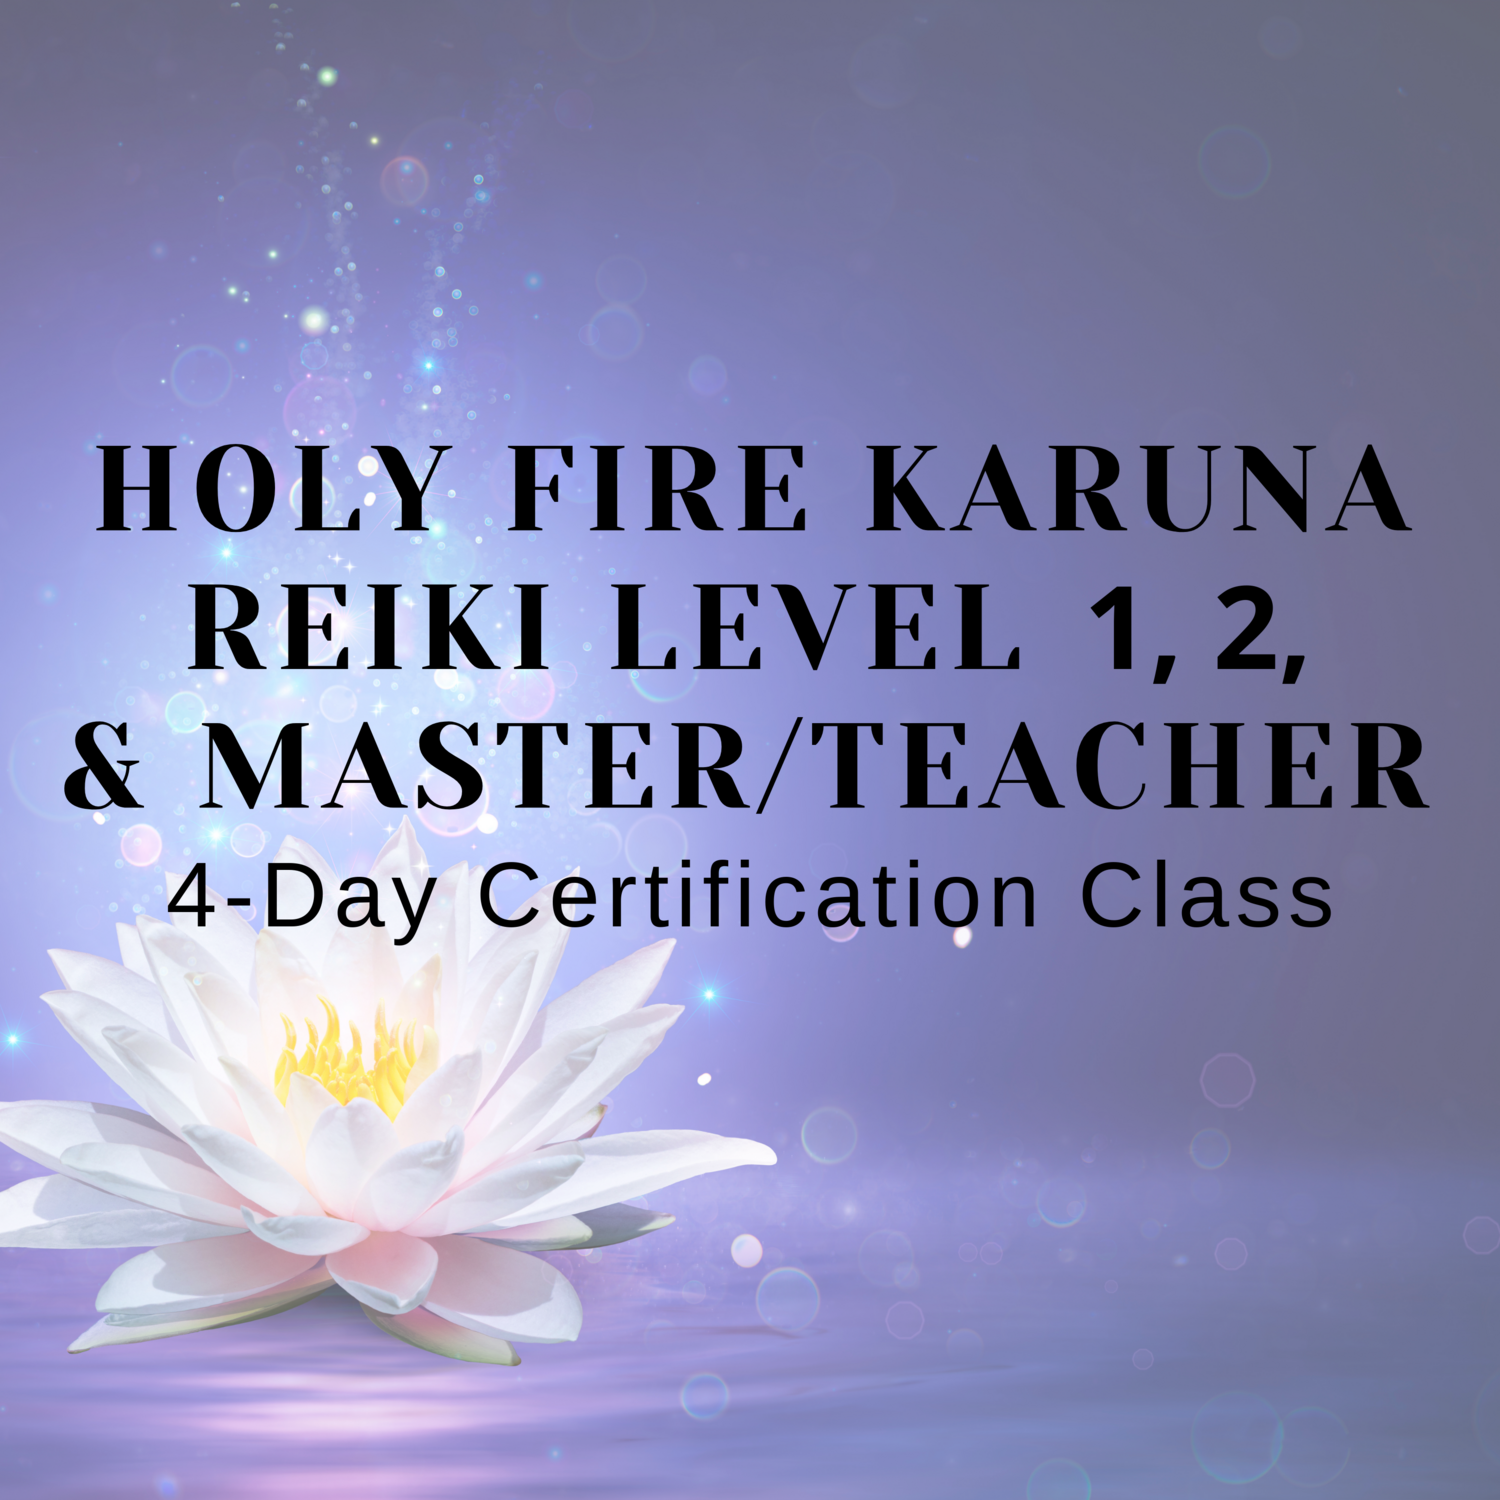 Holy Fire Karuna Level I, II & Karuna Reiki Master Teacher 4-Day Certification Class